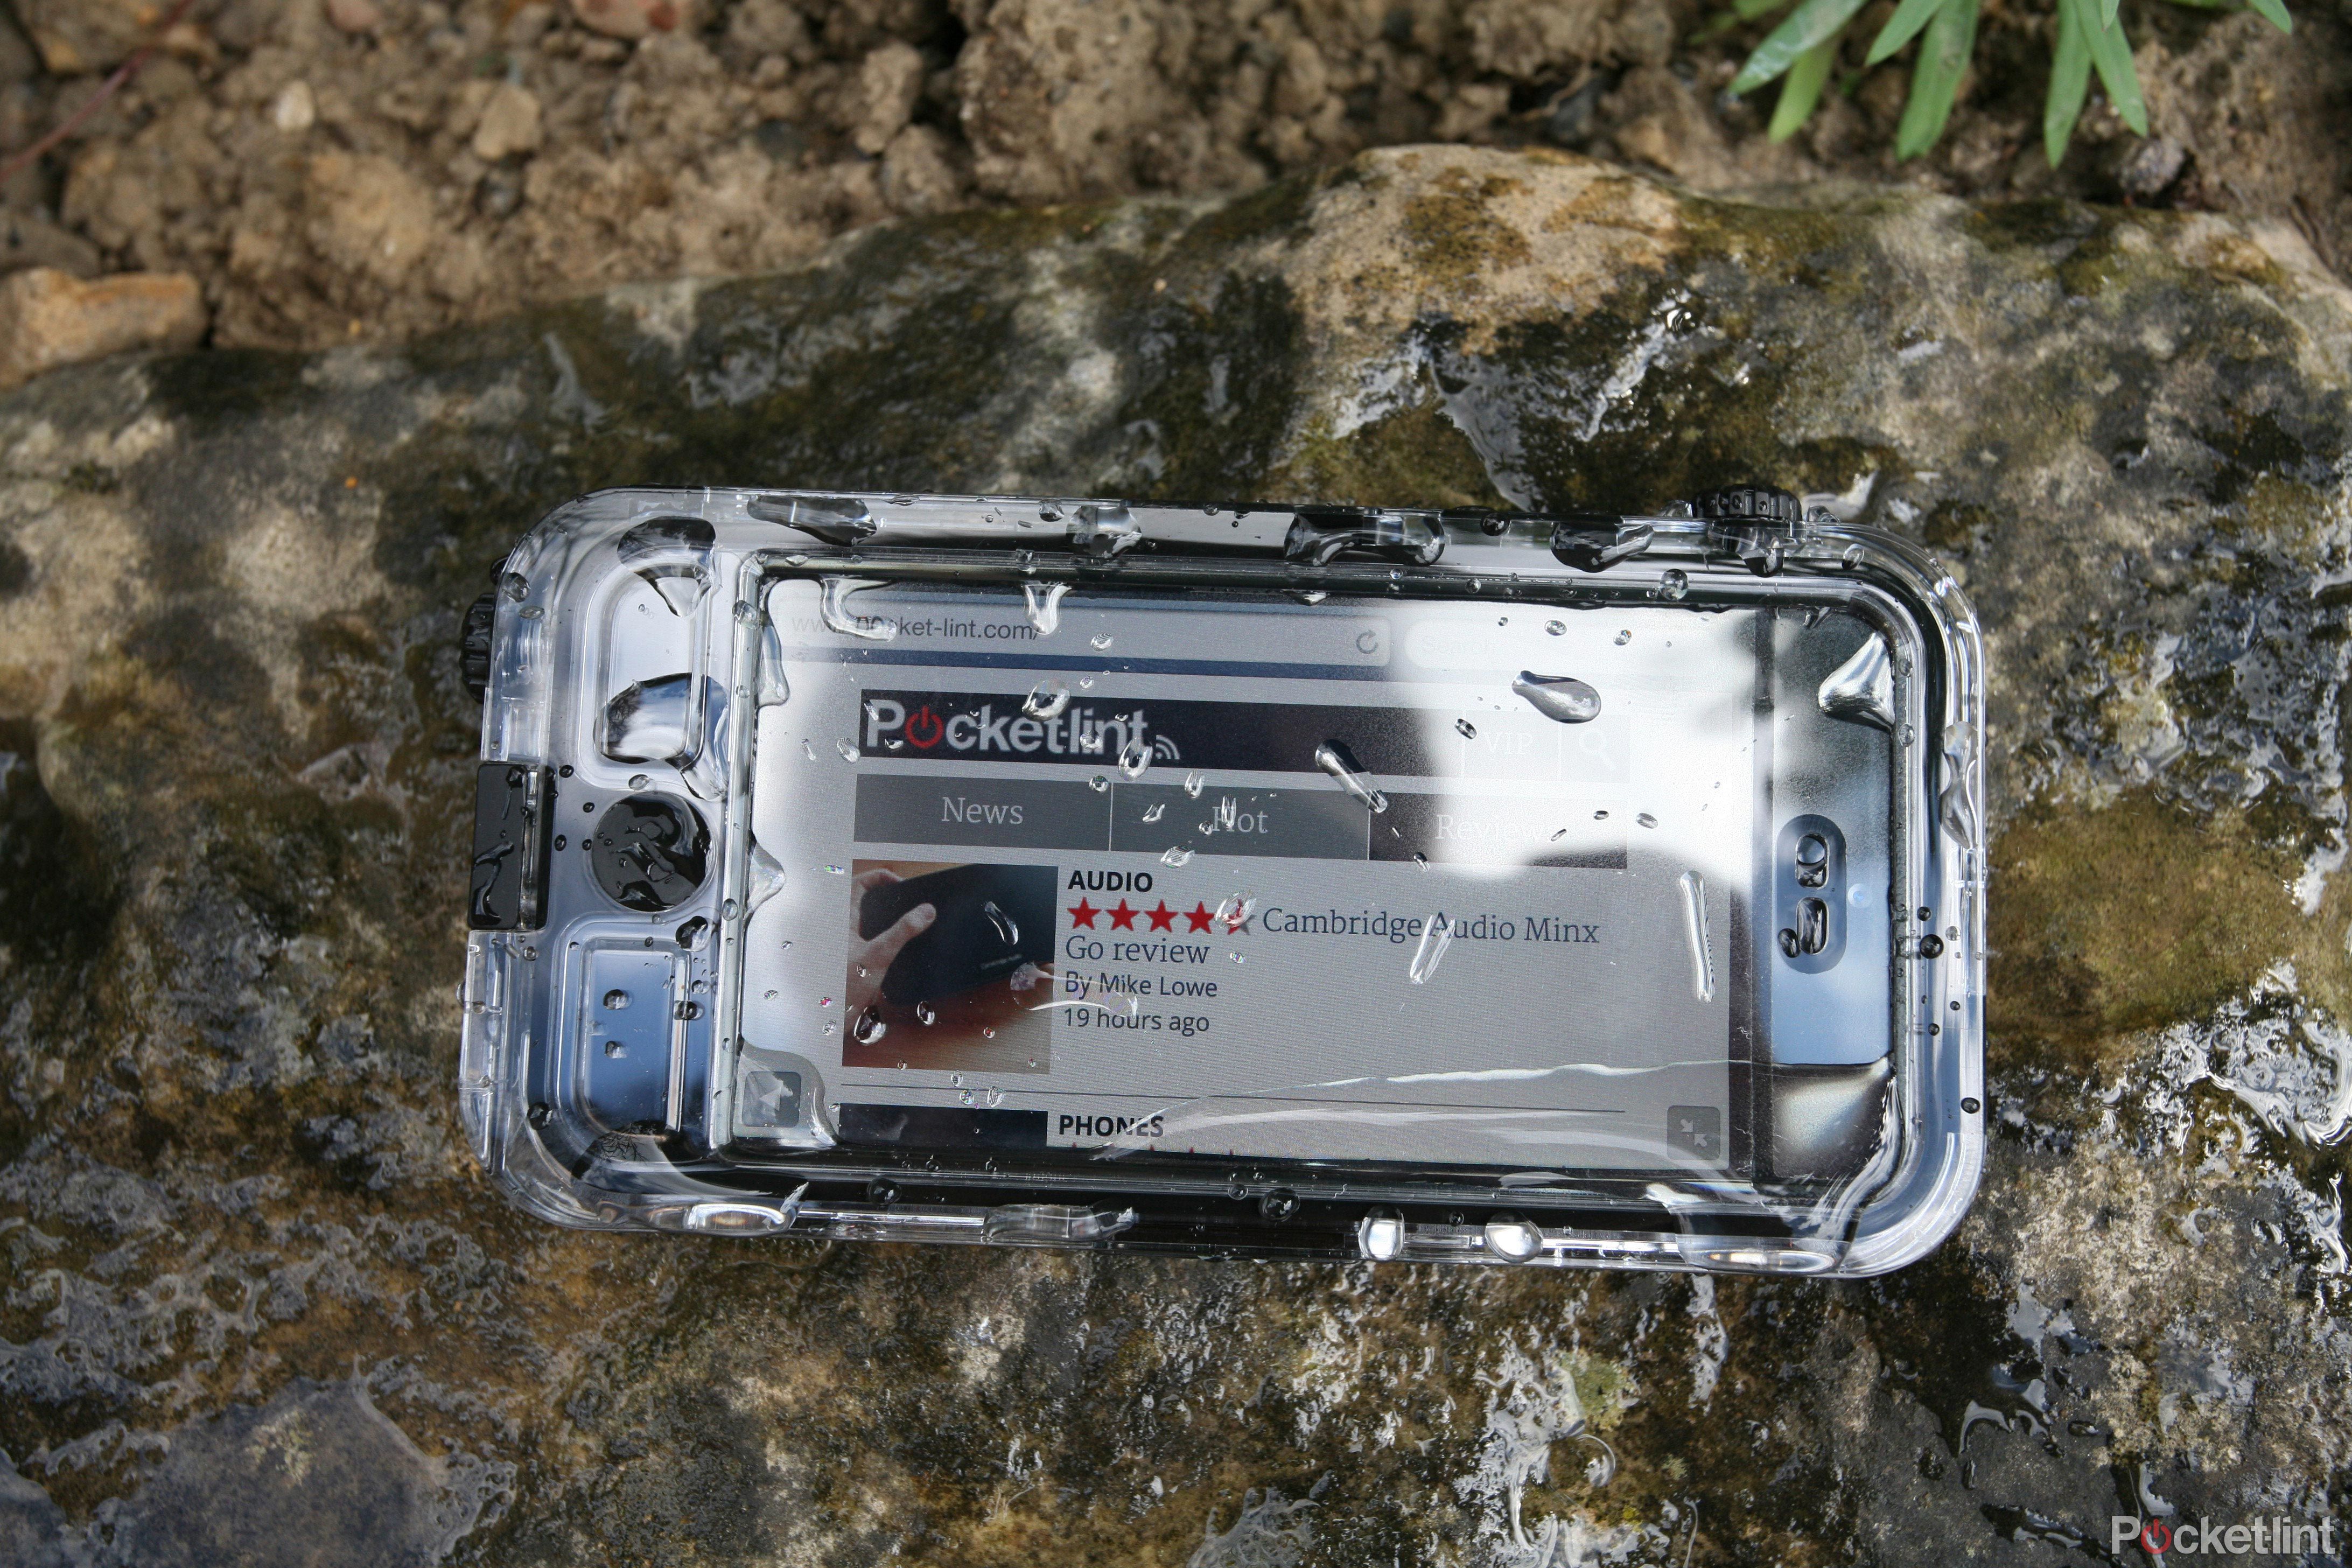 hands on griffin survivor catalyst waterproof iphone 5 case review image 1